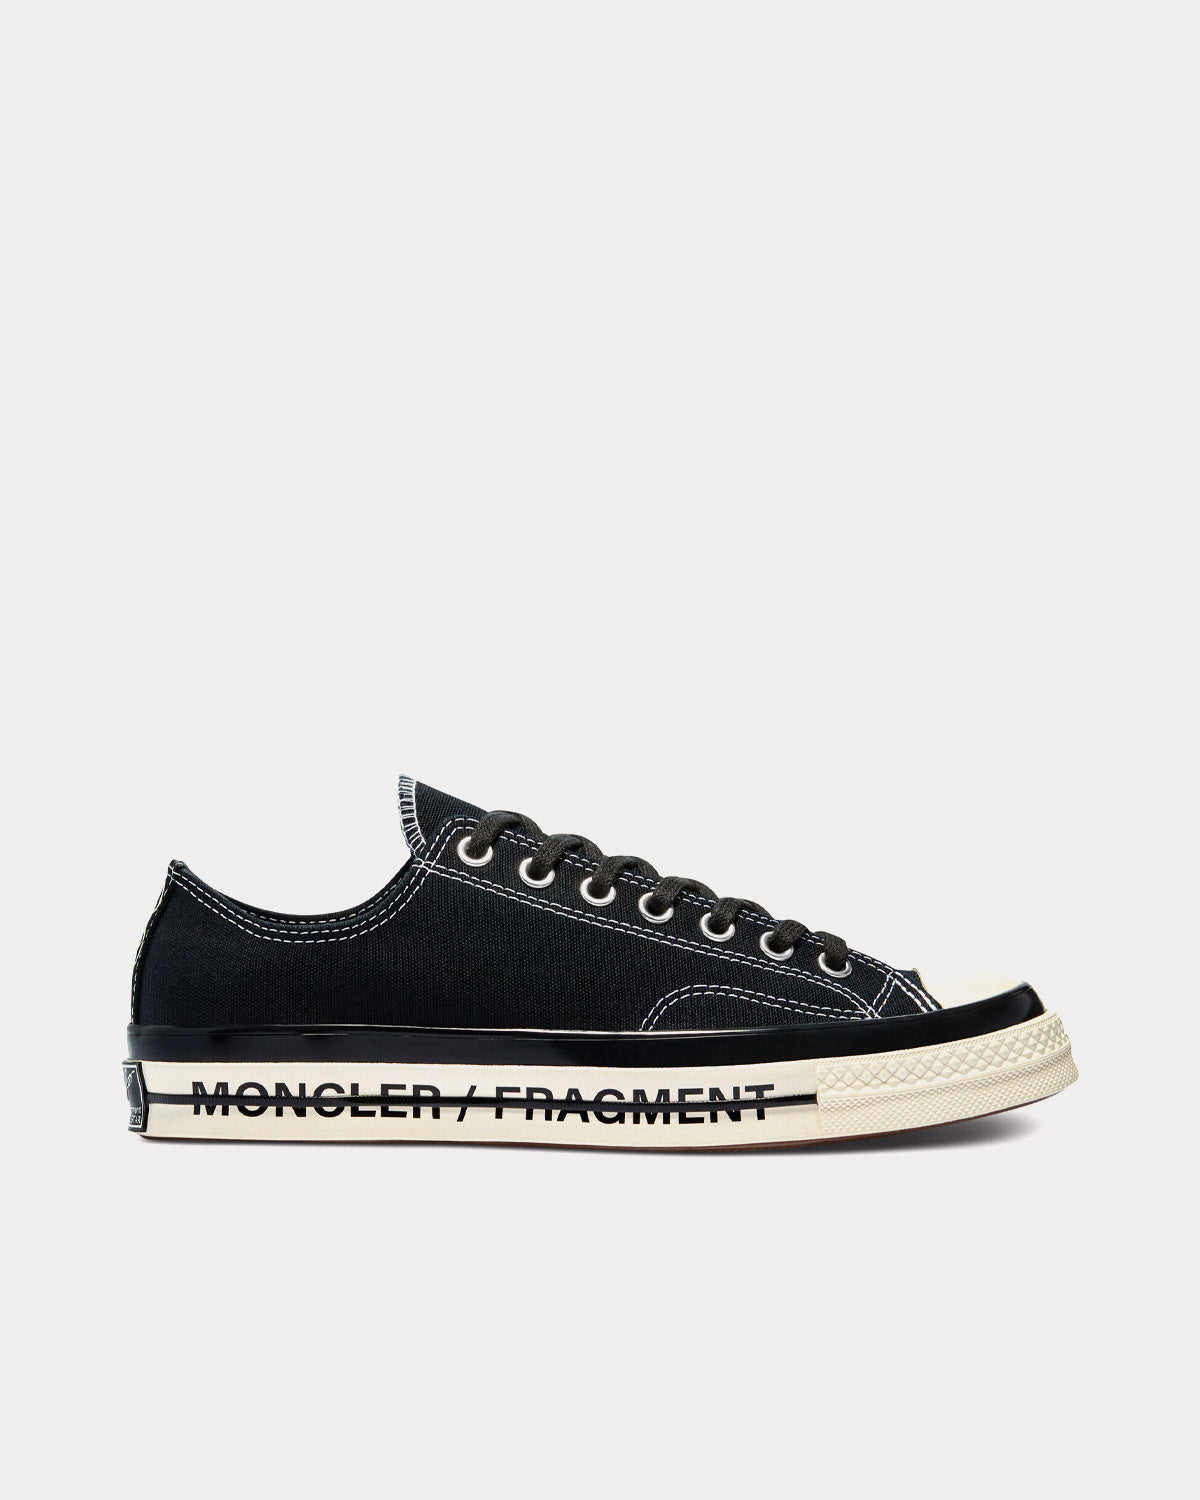 Converse x 7 Moncler FRGMT - Chuck 70 Black / Black / Egret Low Top Sneakers